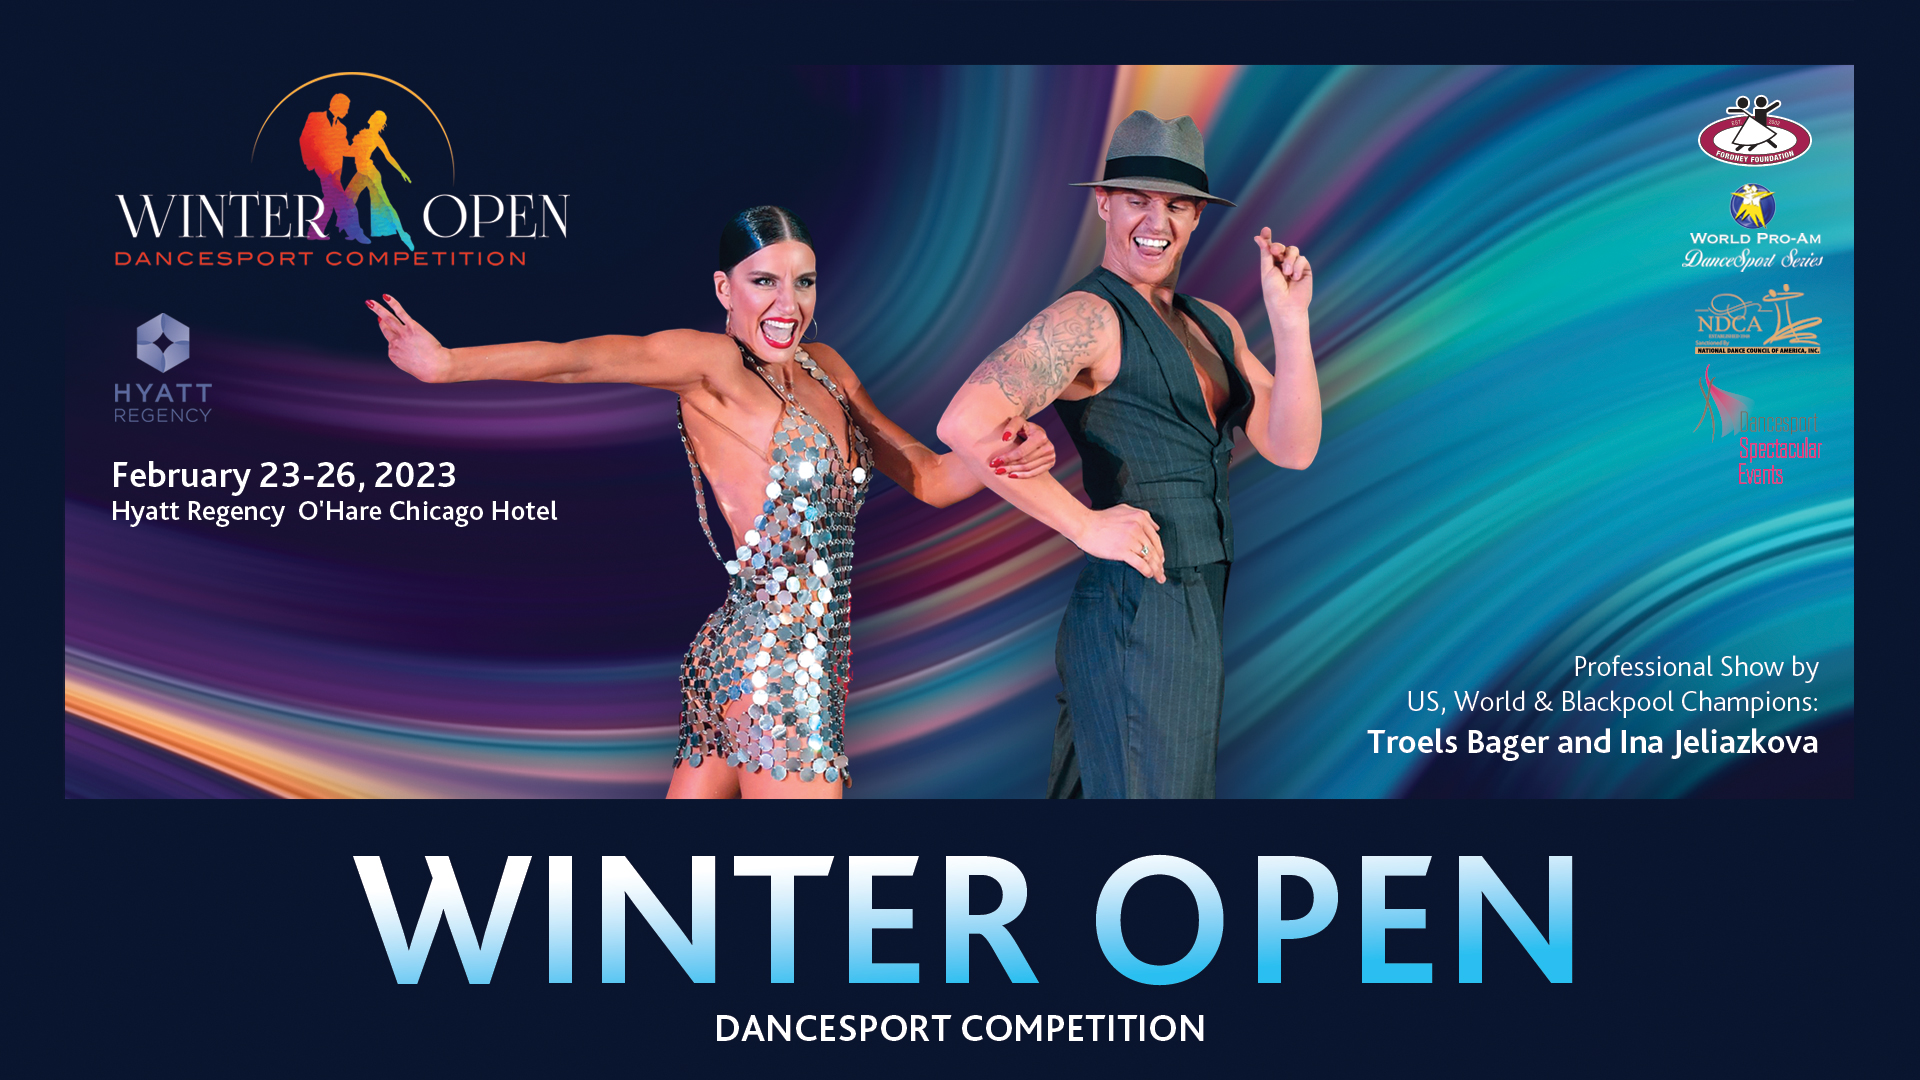 Winter Open Dancesport Competition